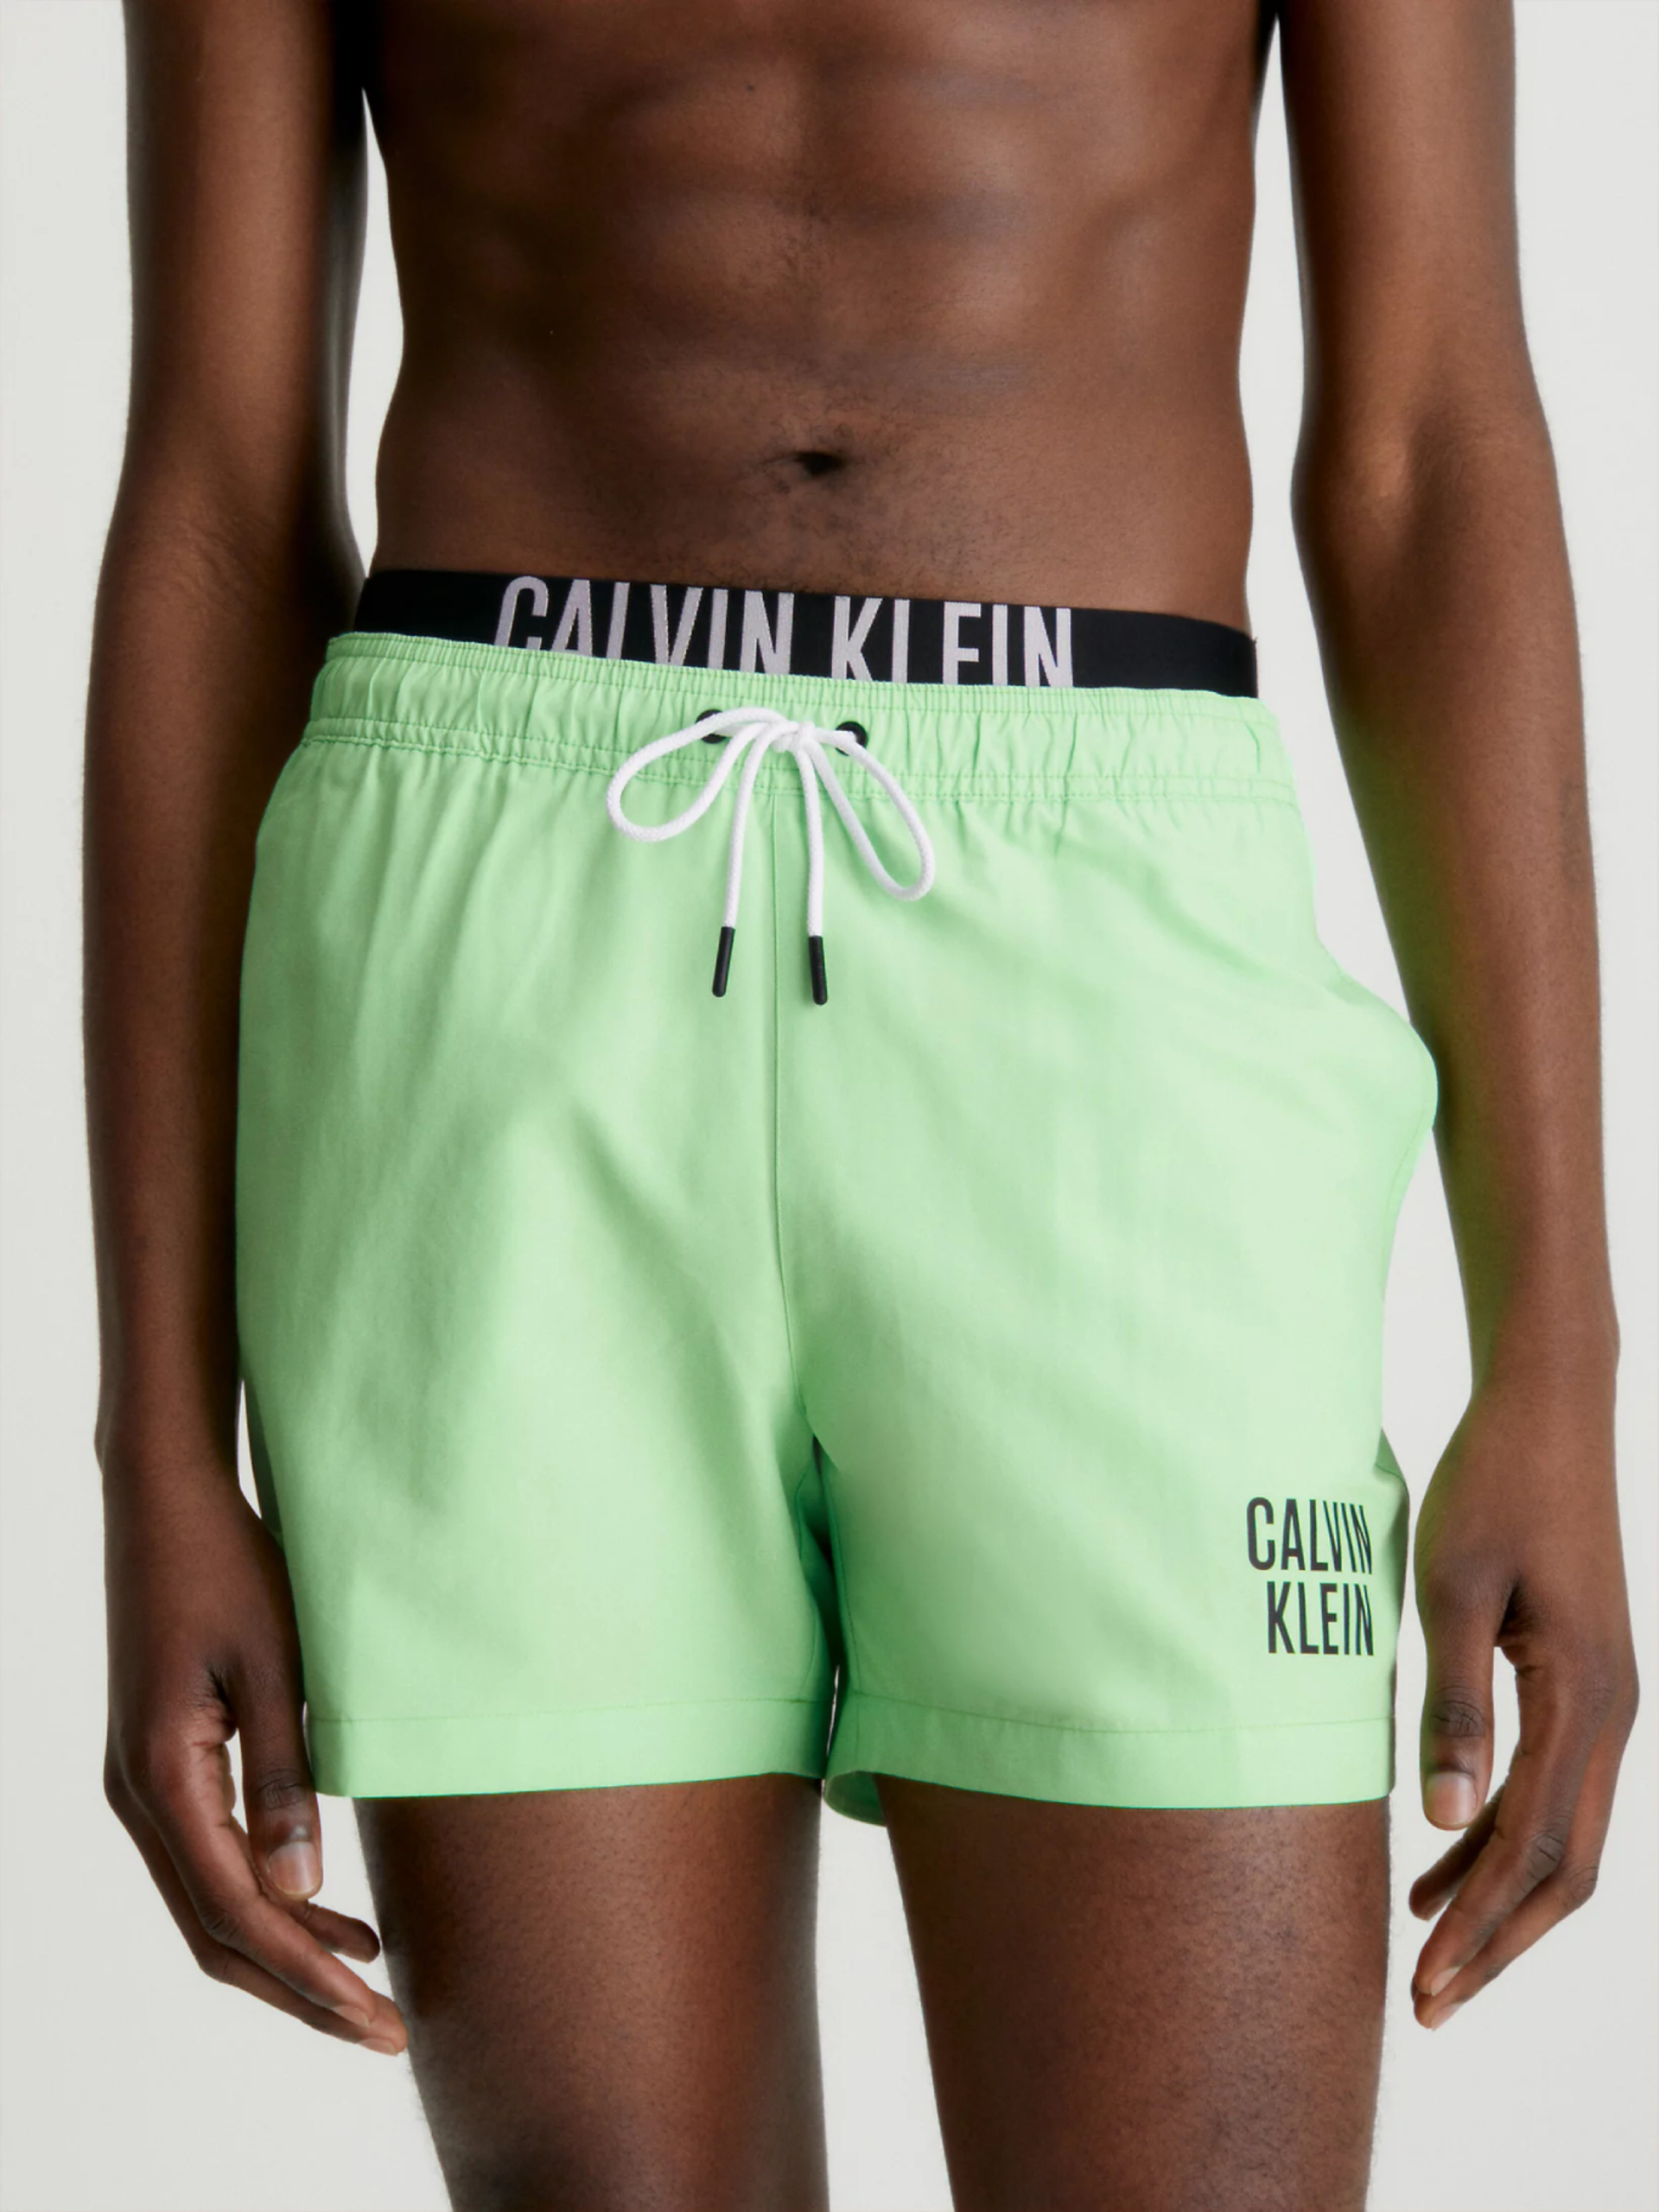 Calvin Klein pánské zelené plavky - XL (LV0)